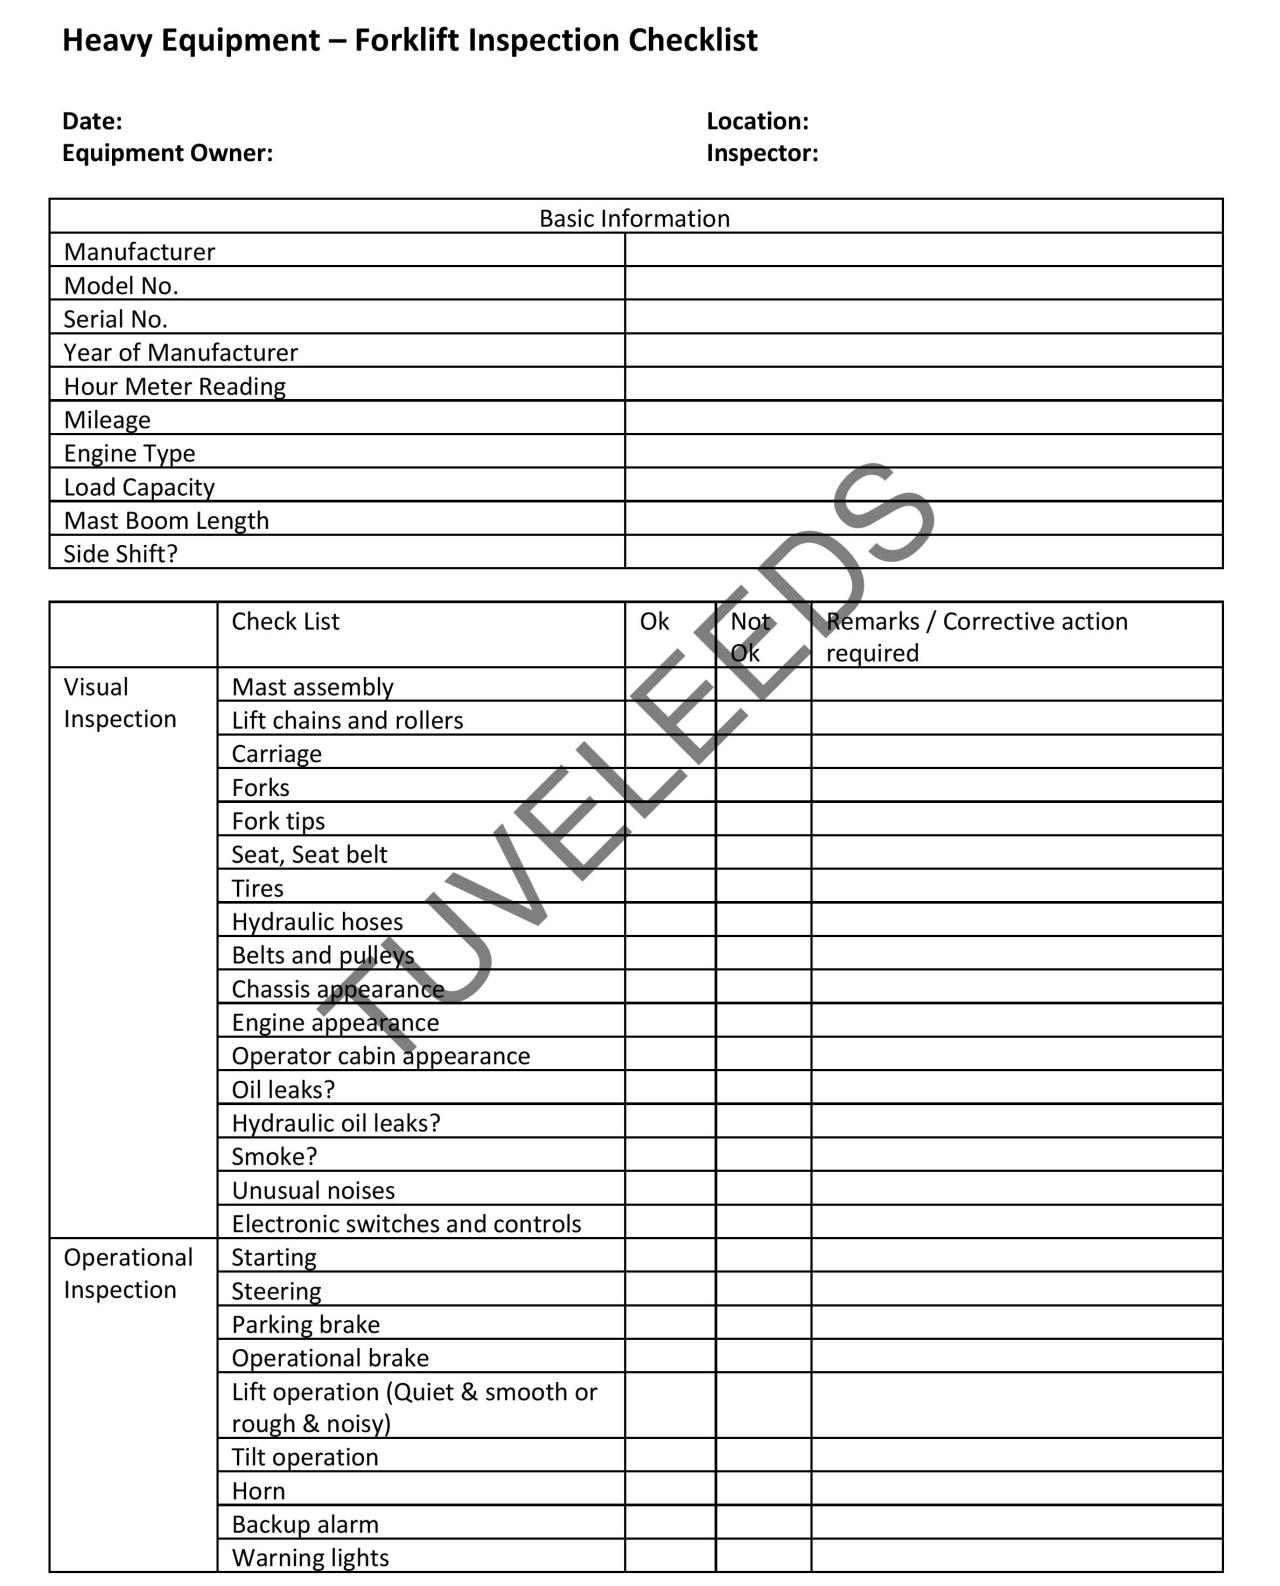 Product Forklift Inspection Checklist - Tove Leeds image